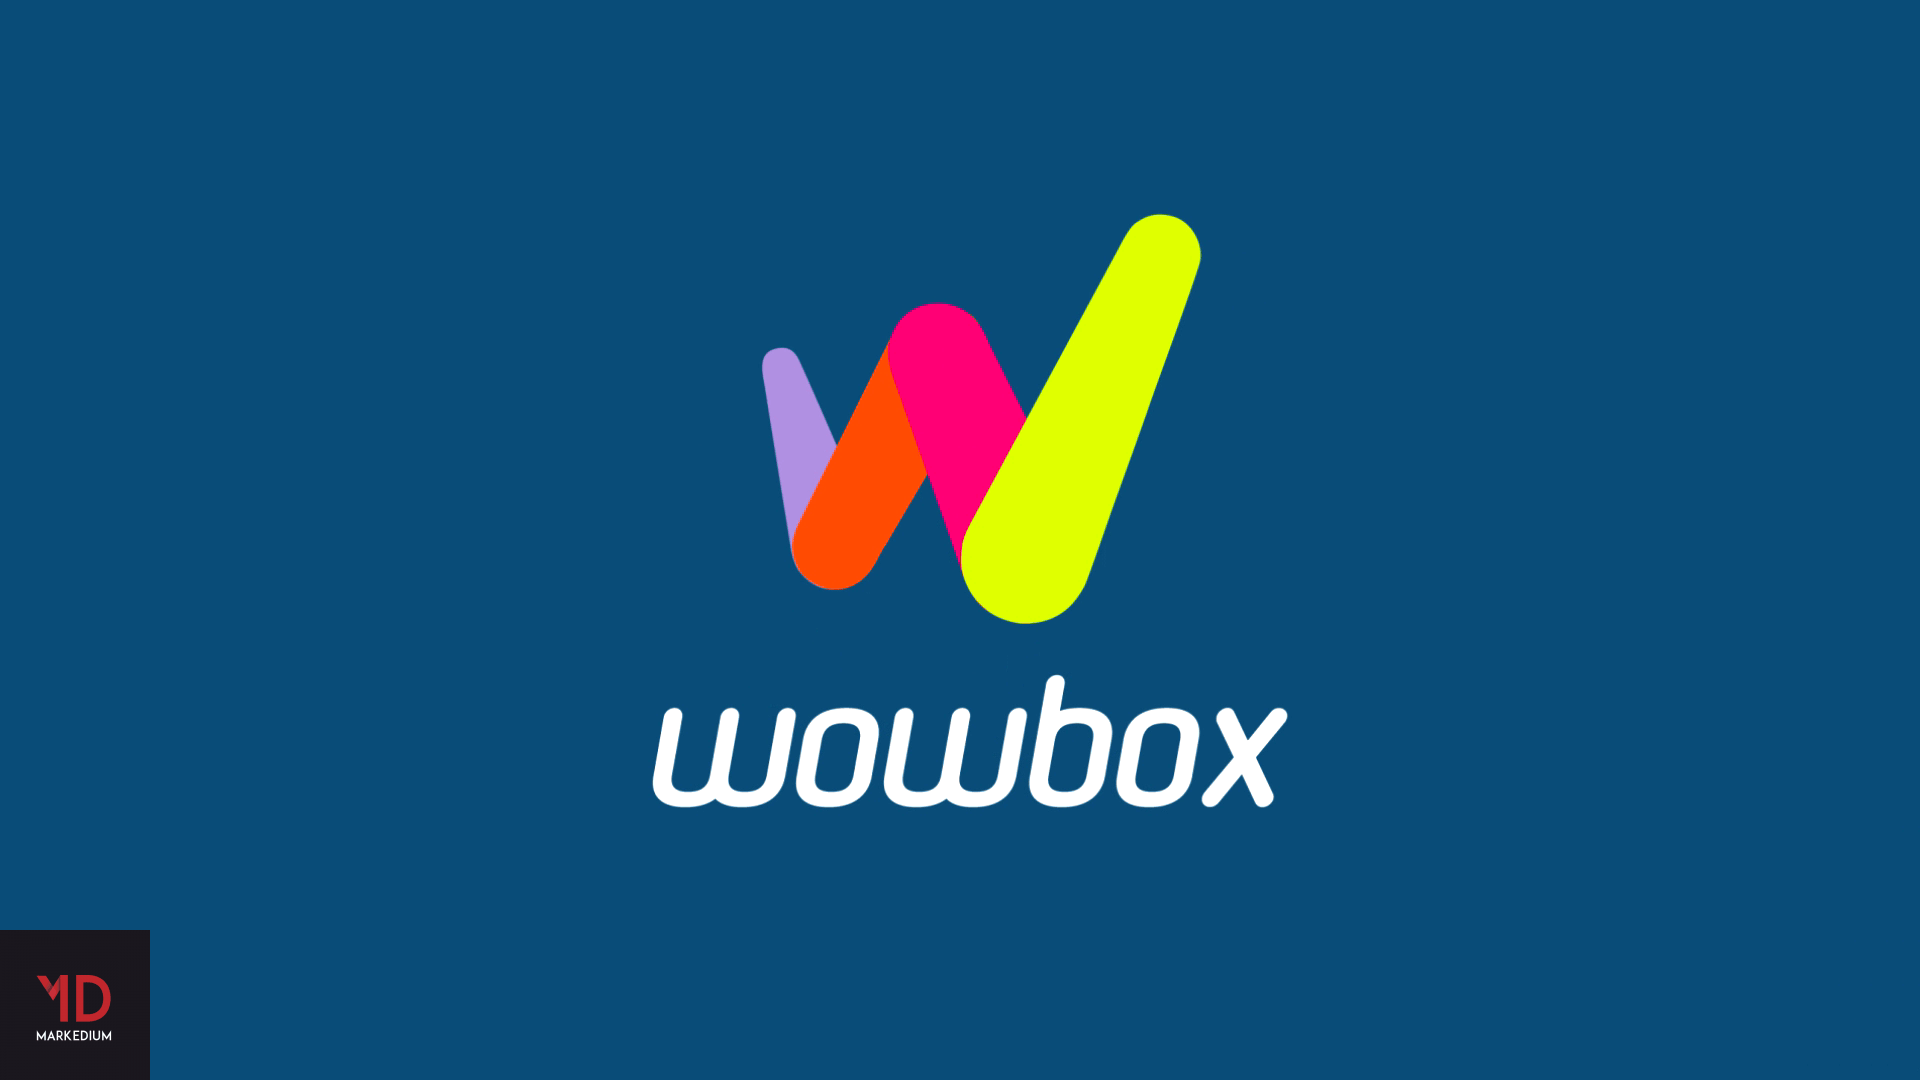 WowBox-Markedium